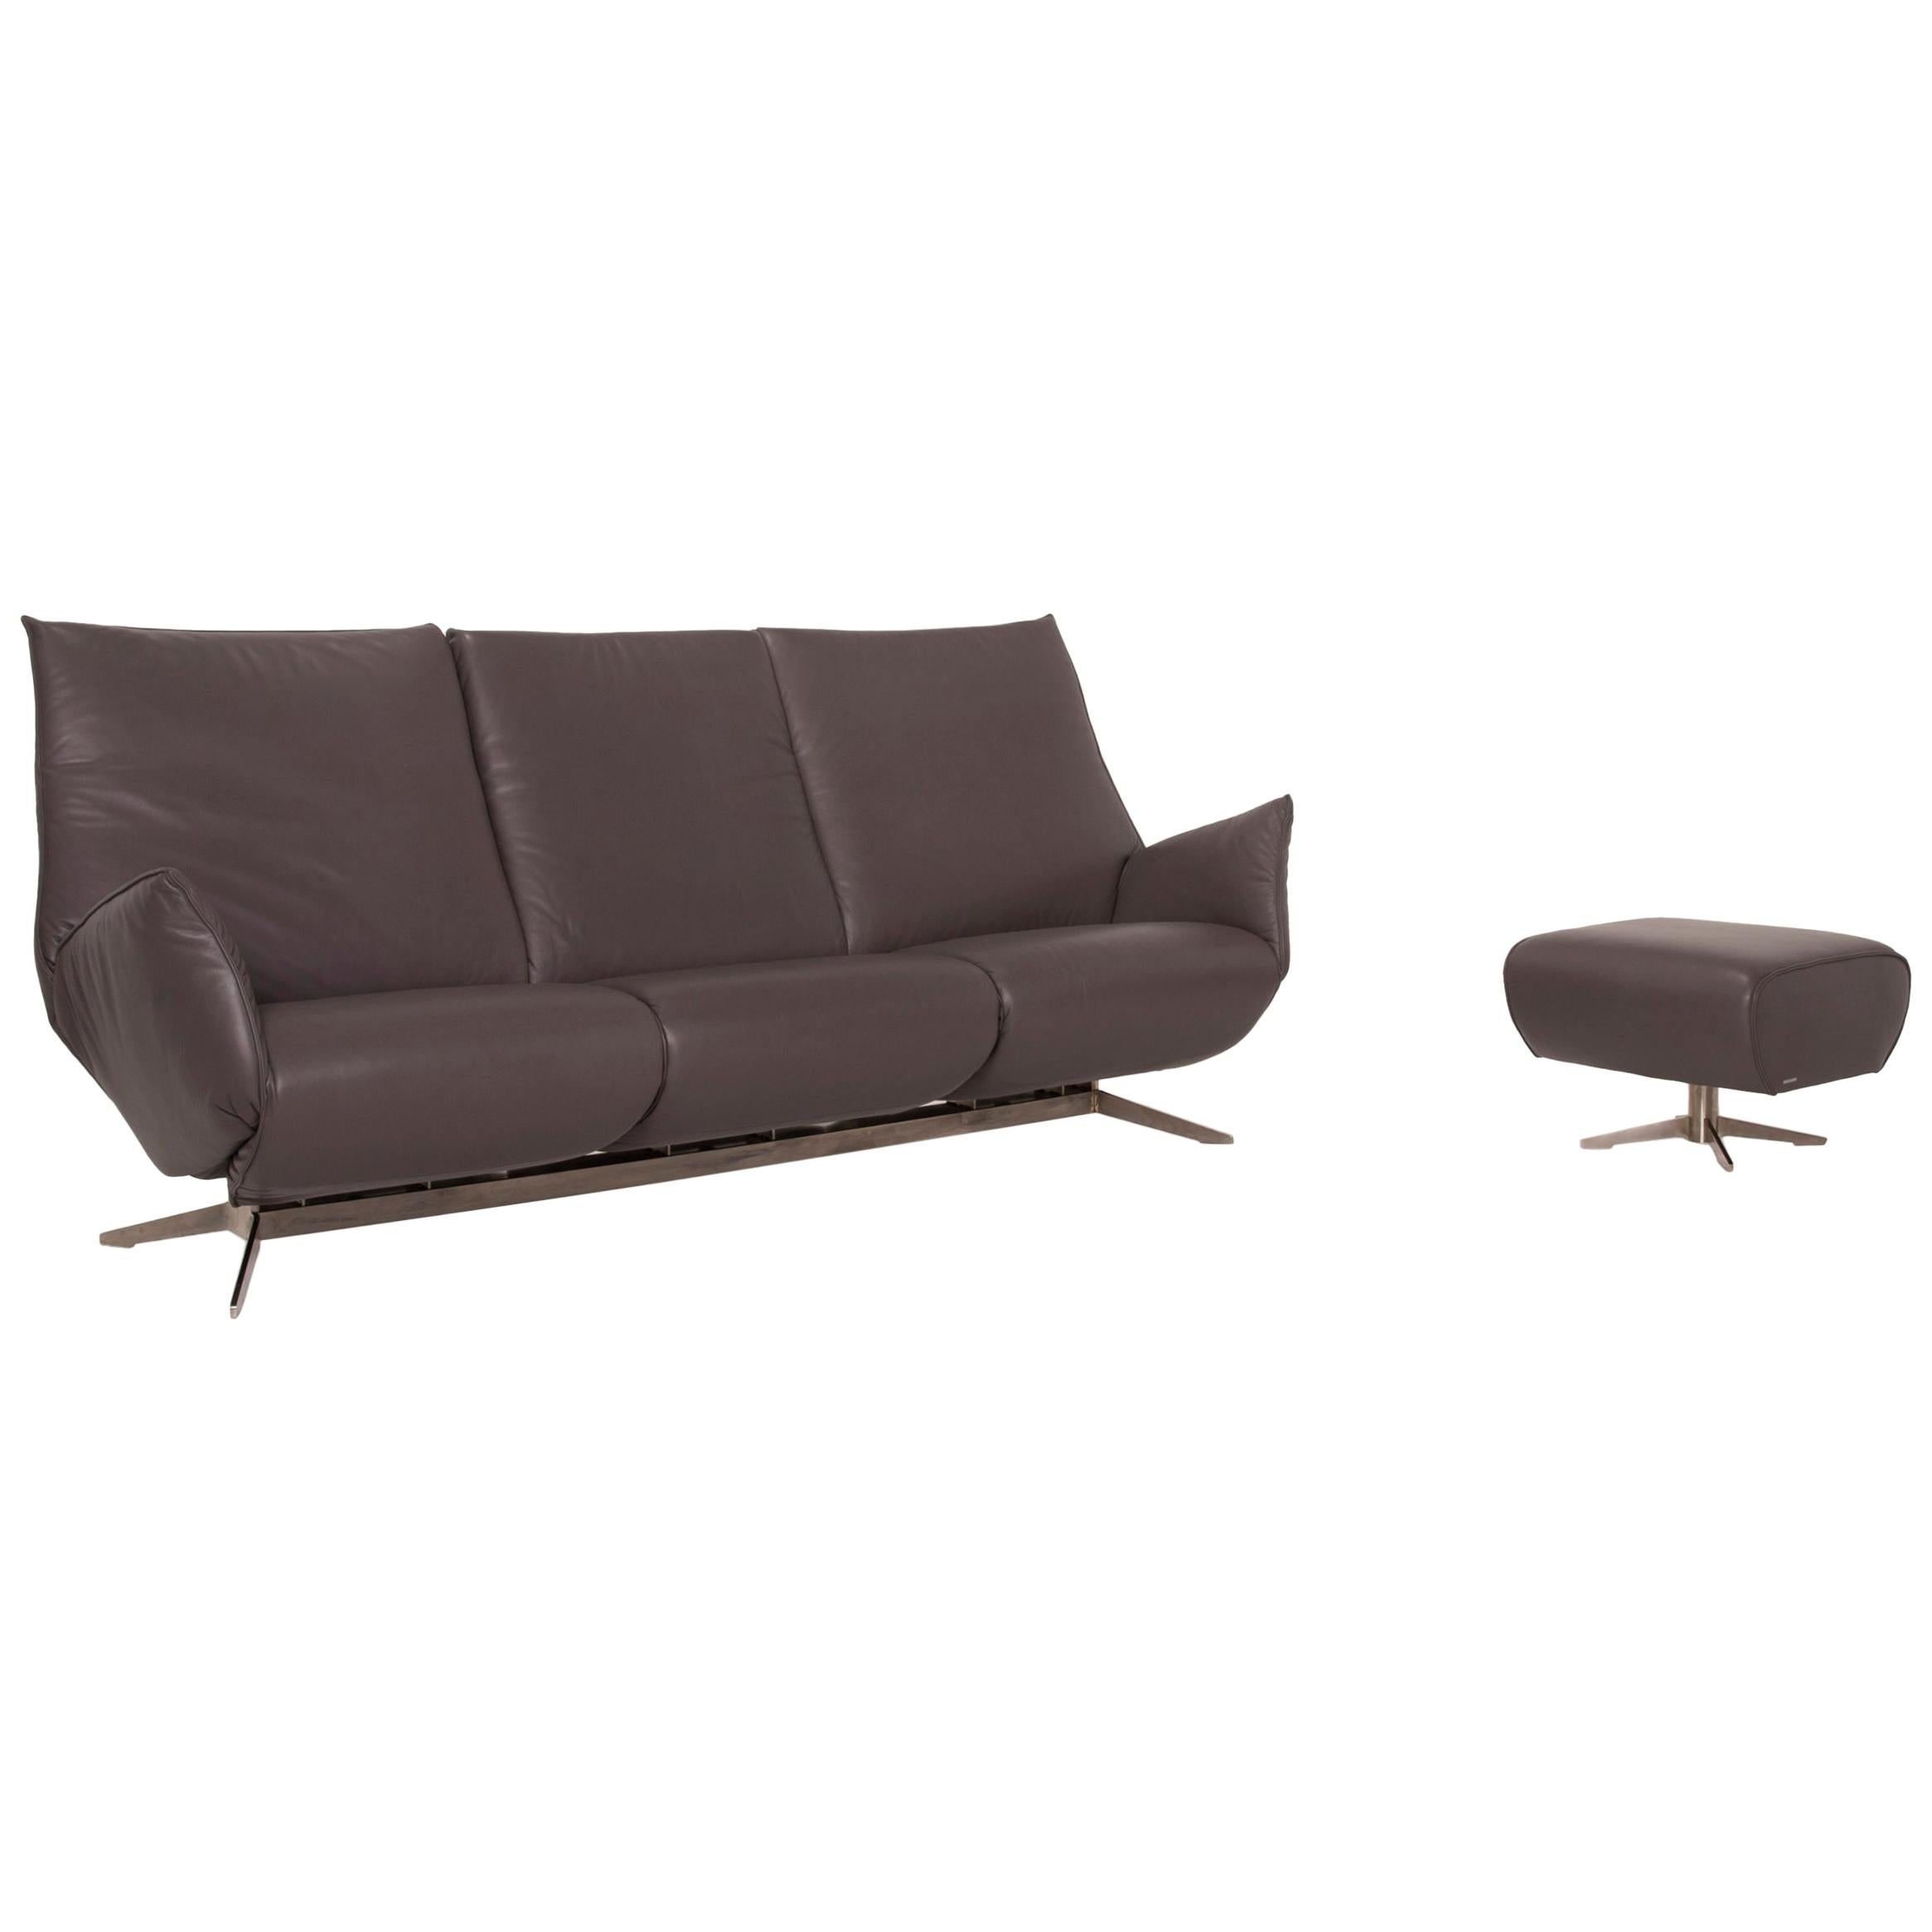 Koinor Evita Leather Sofa Set Gray Brown 1x Three-Seater 1x Stool For Sale